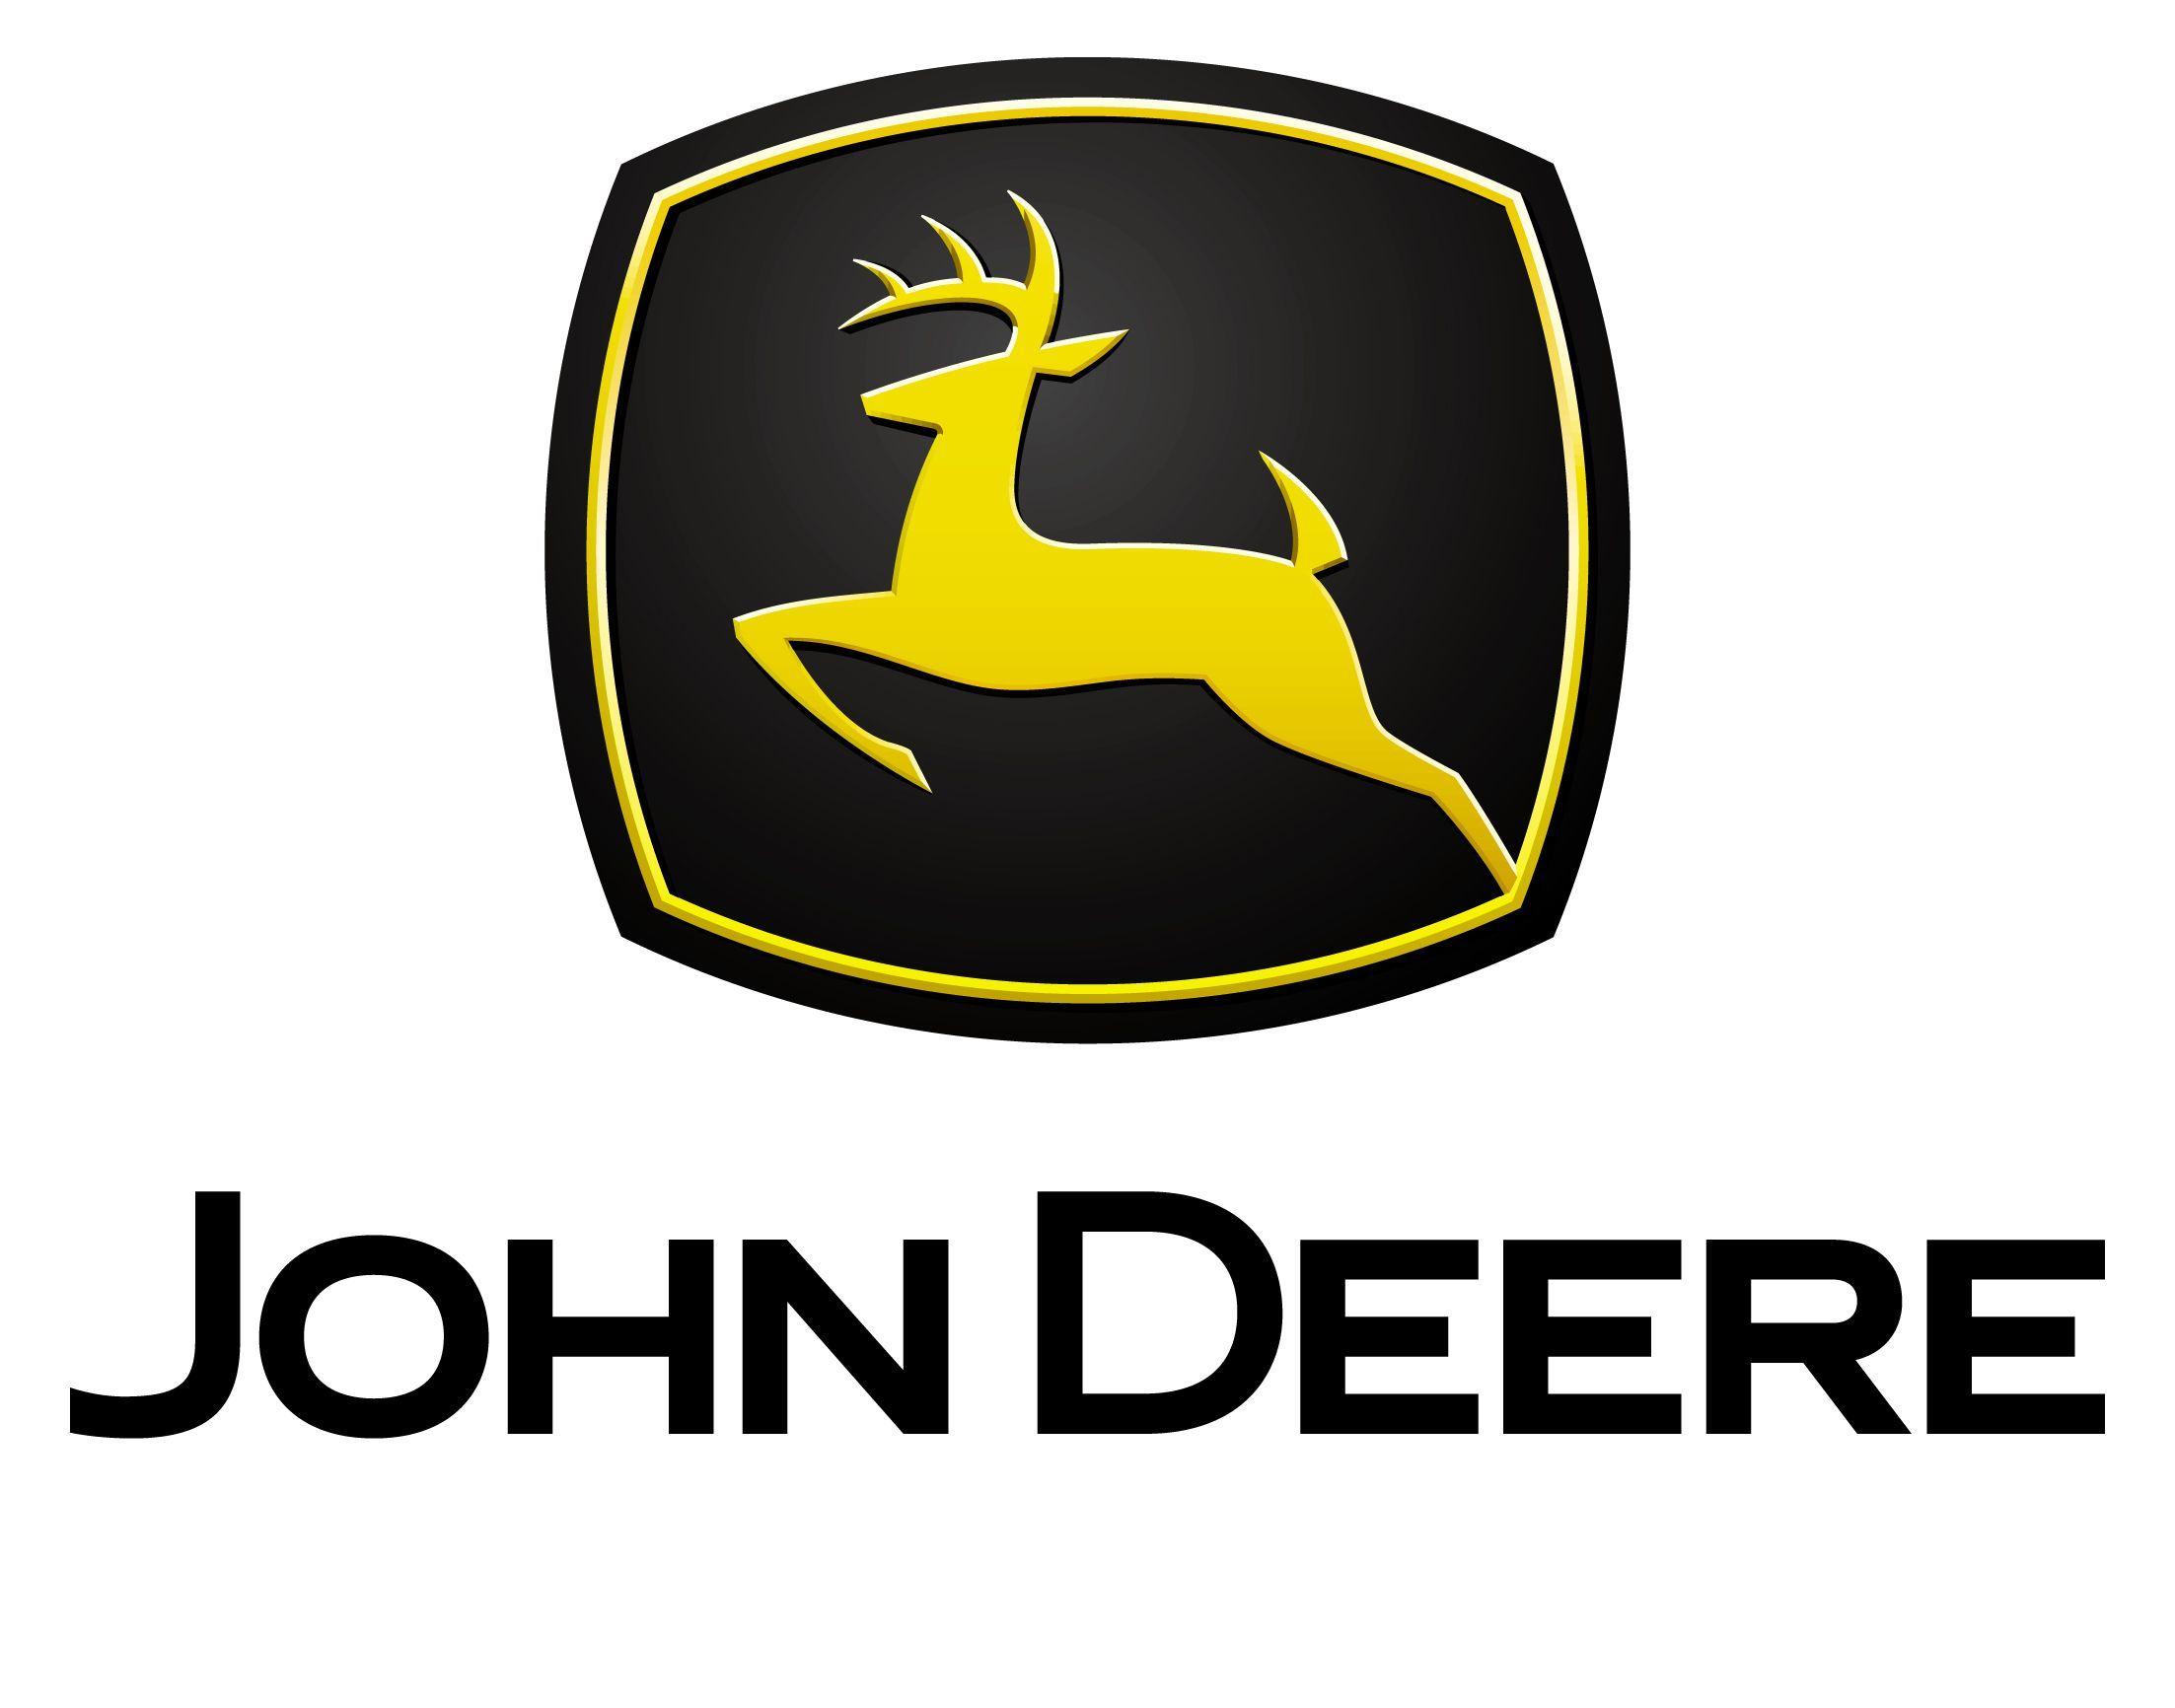 John Deere Construction Logo - John Deere construction logo | Randomness | Tractors, John deere ...